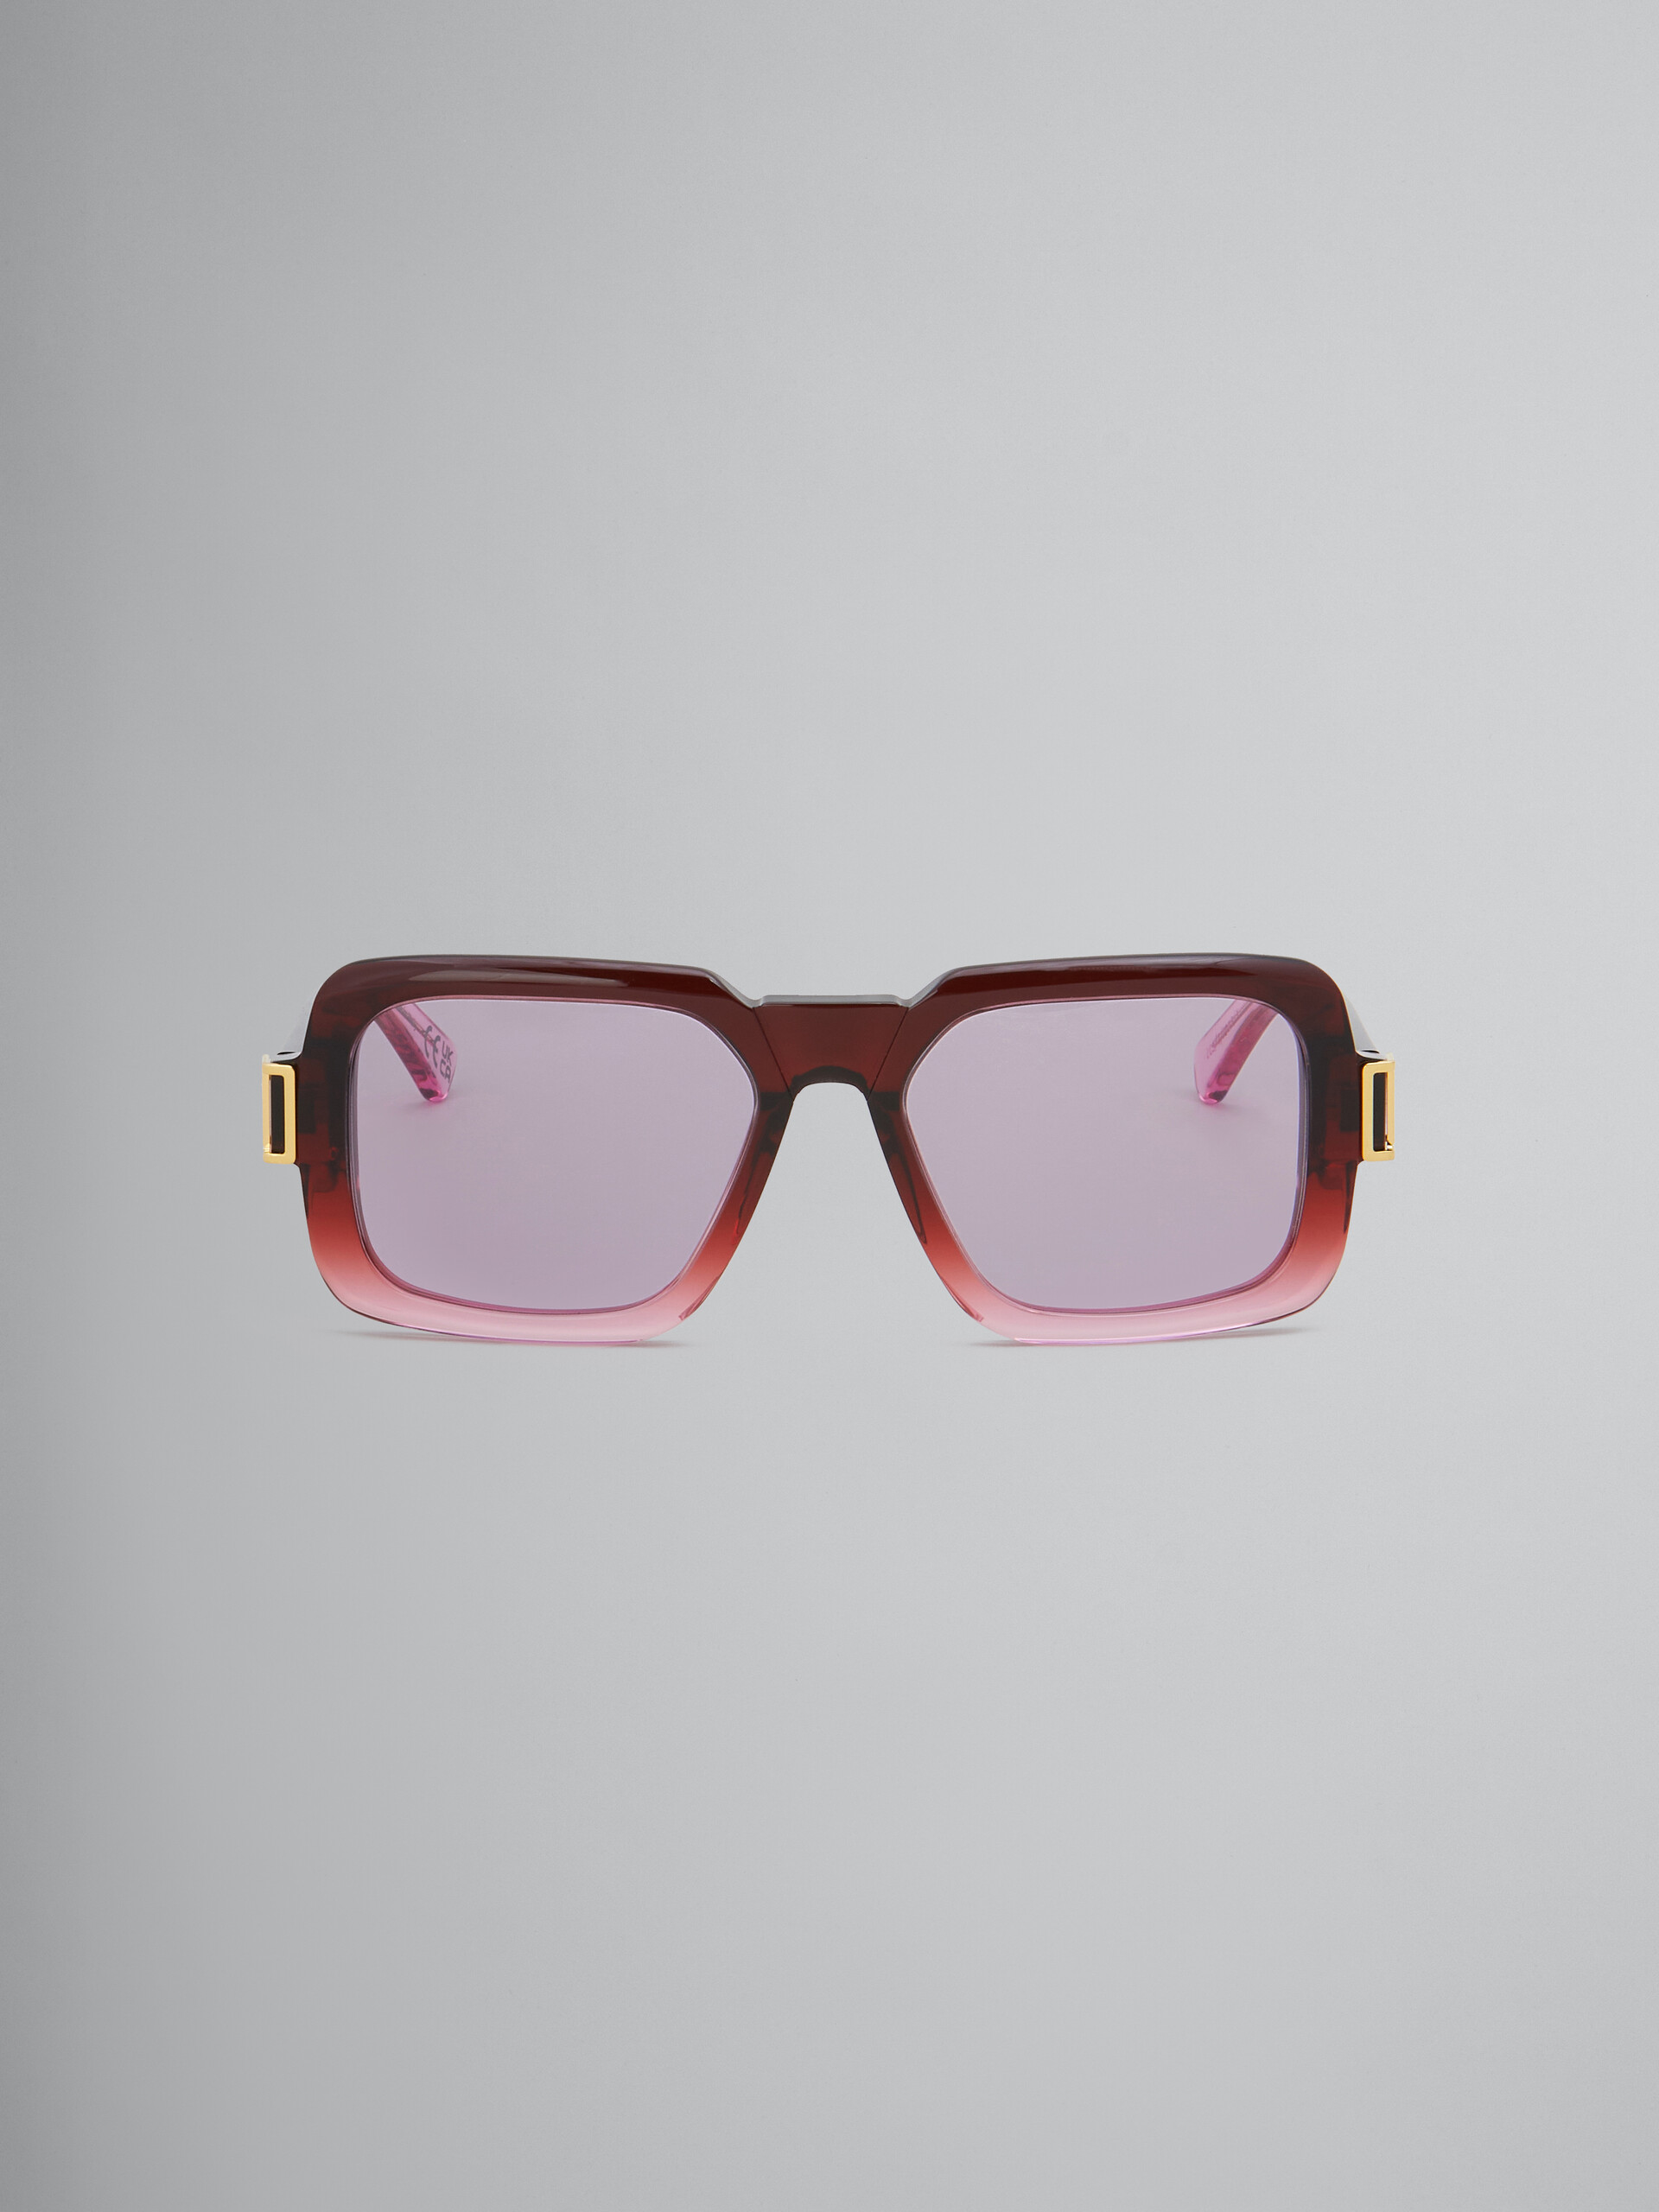 Black Zamalek sunglasses - Optical - Image 1